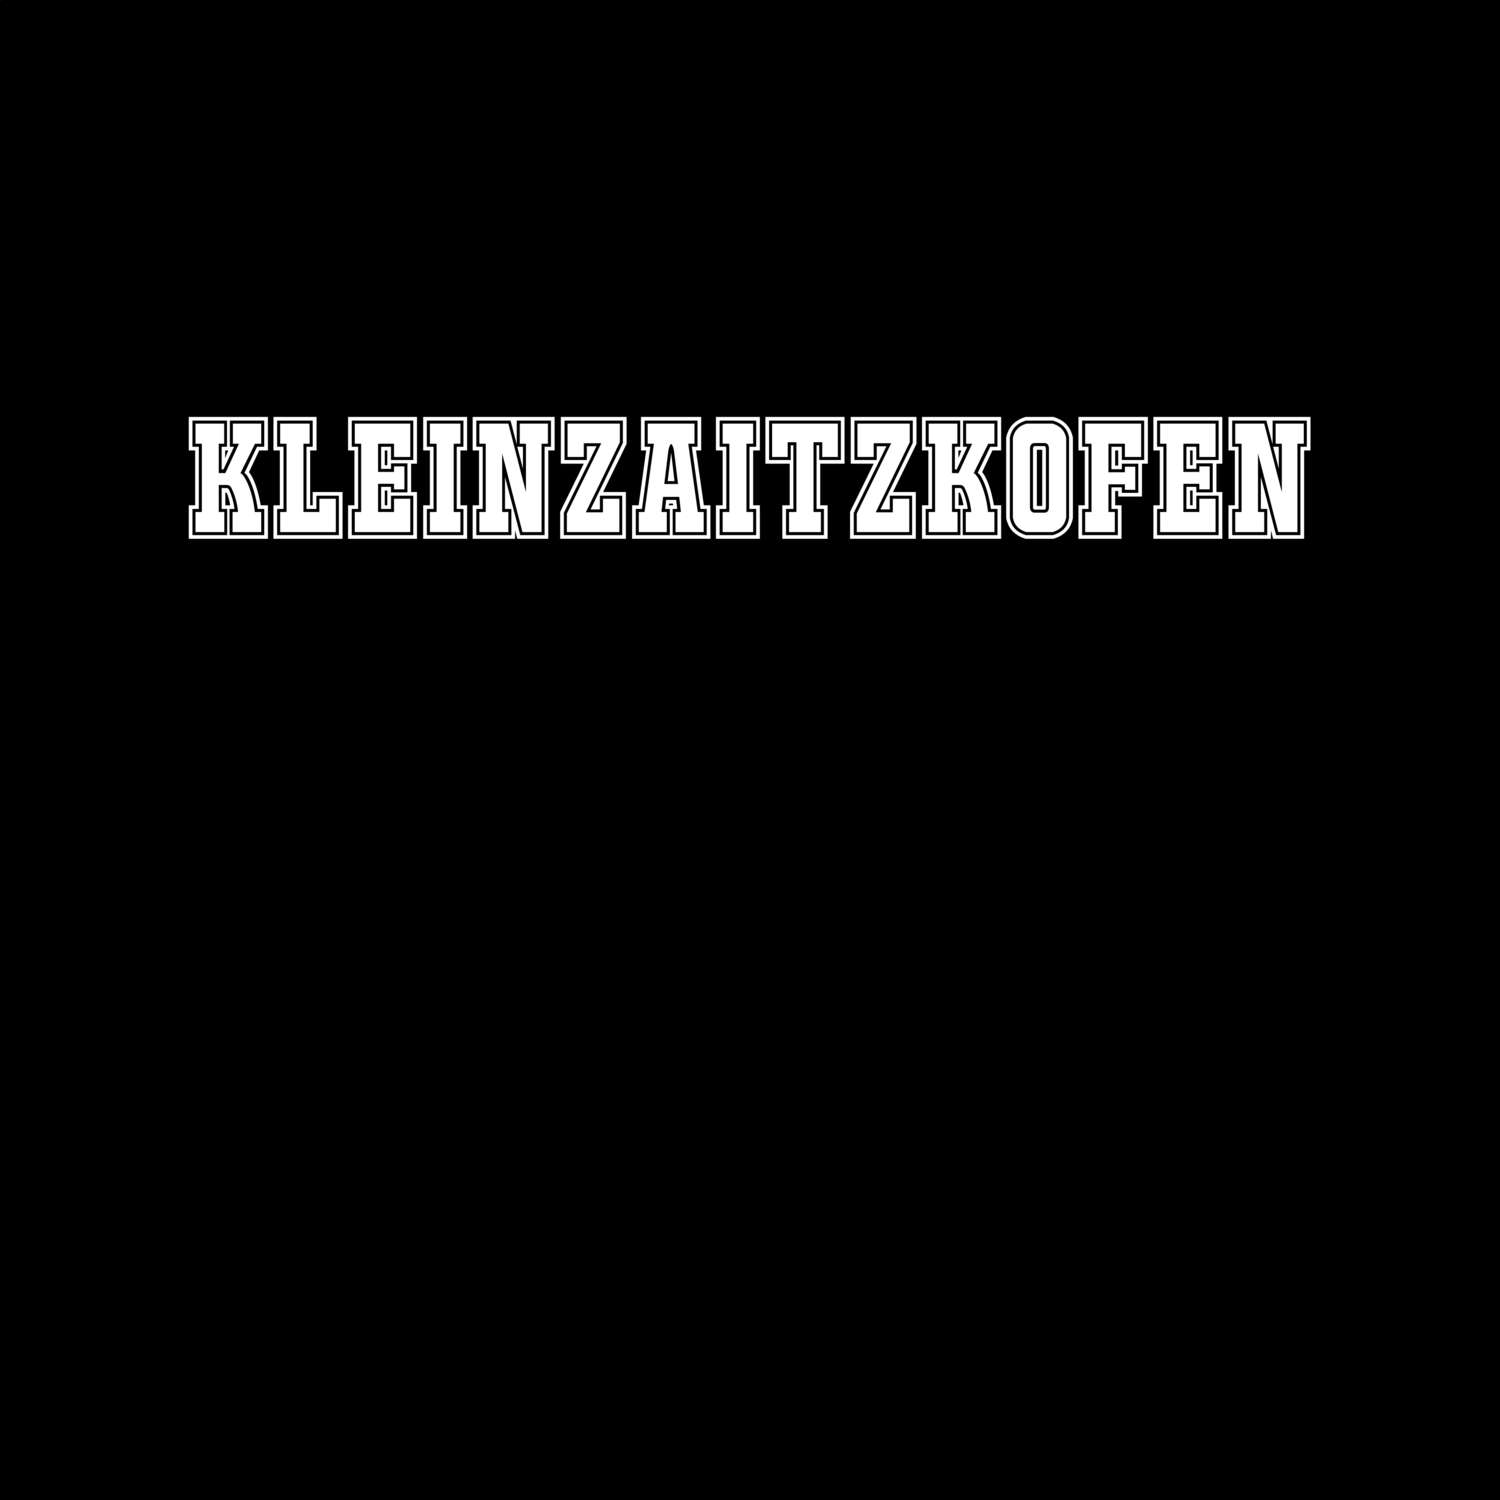 Kleinzaitzkofen T-Shirt »Classic«